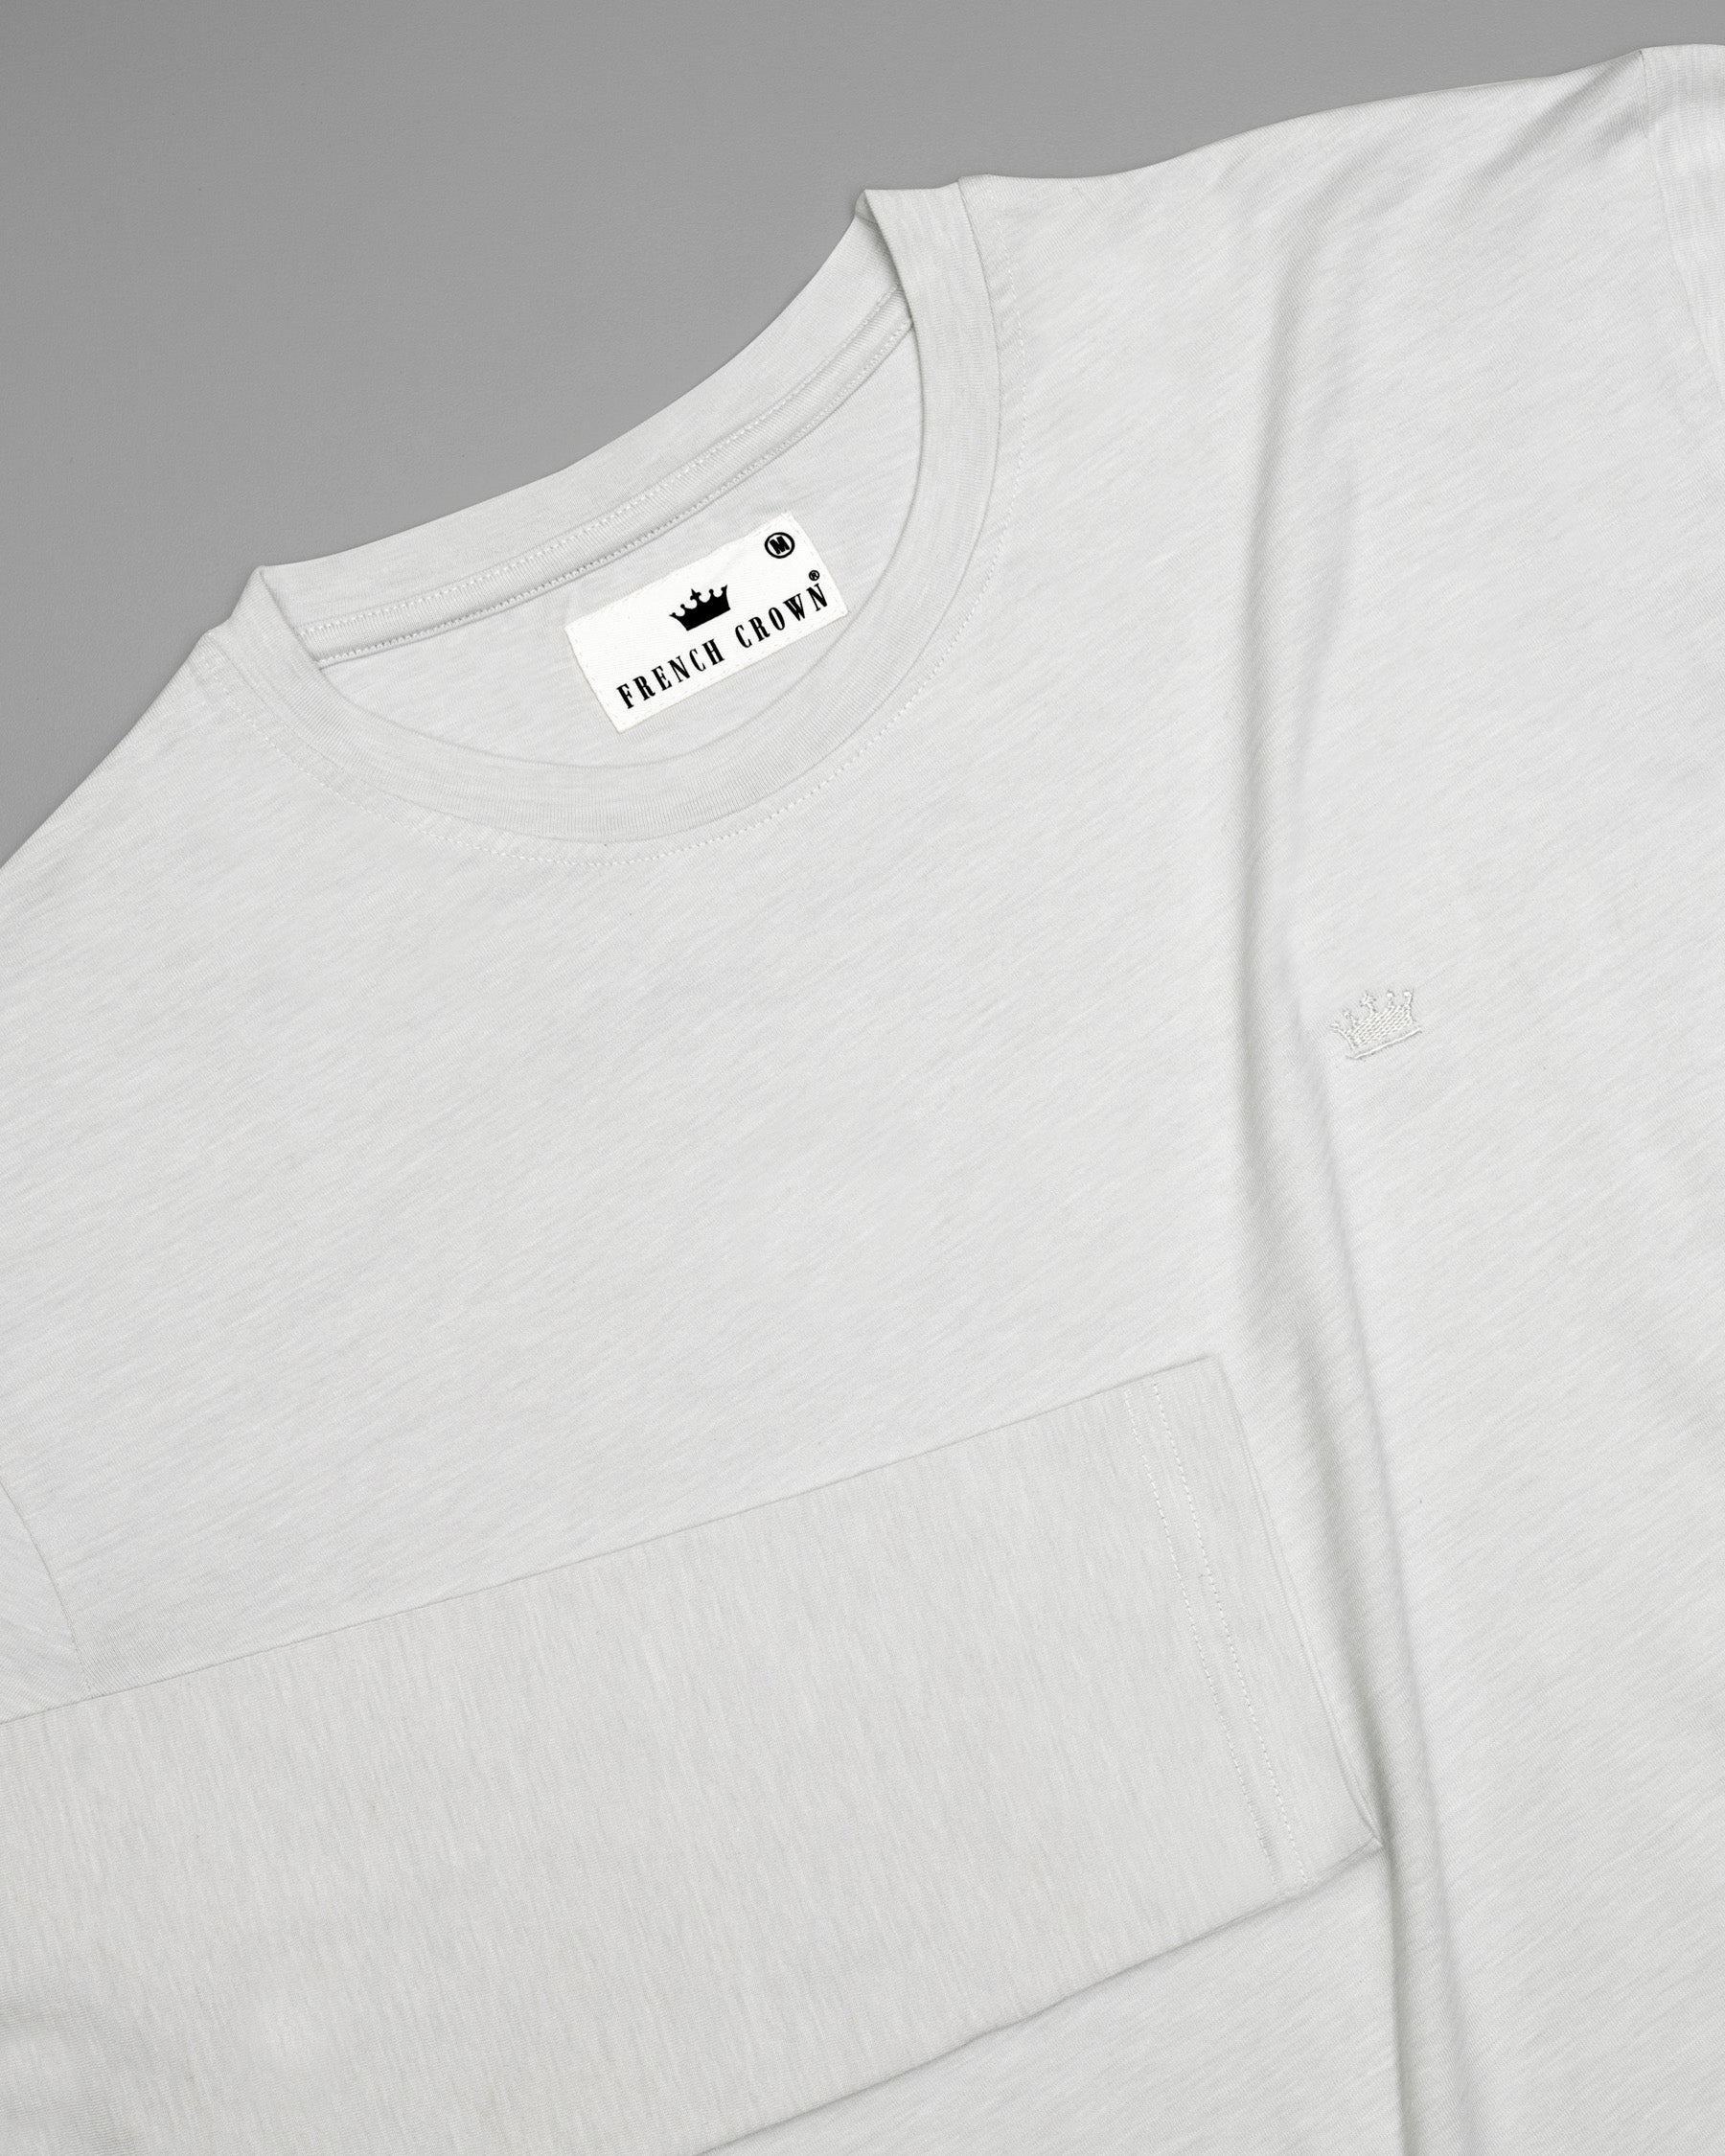 Light grey Slubbed Full-Sleeve Super soft Supima Organic Cotton Jersey T-shirt TS148-S, TS148-M, TS148-L, TS148-XL, TS148-XXL